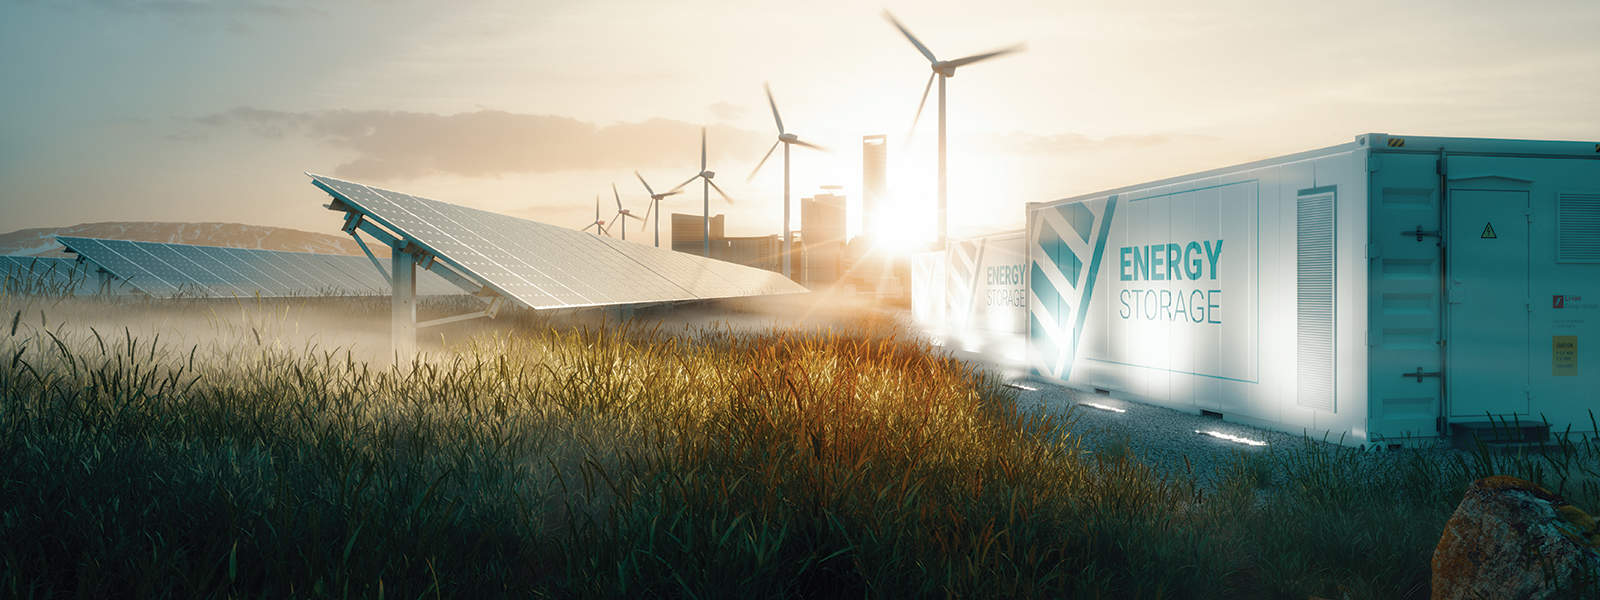 Smart grid renewable